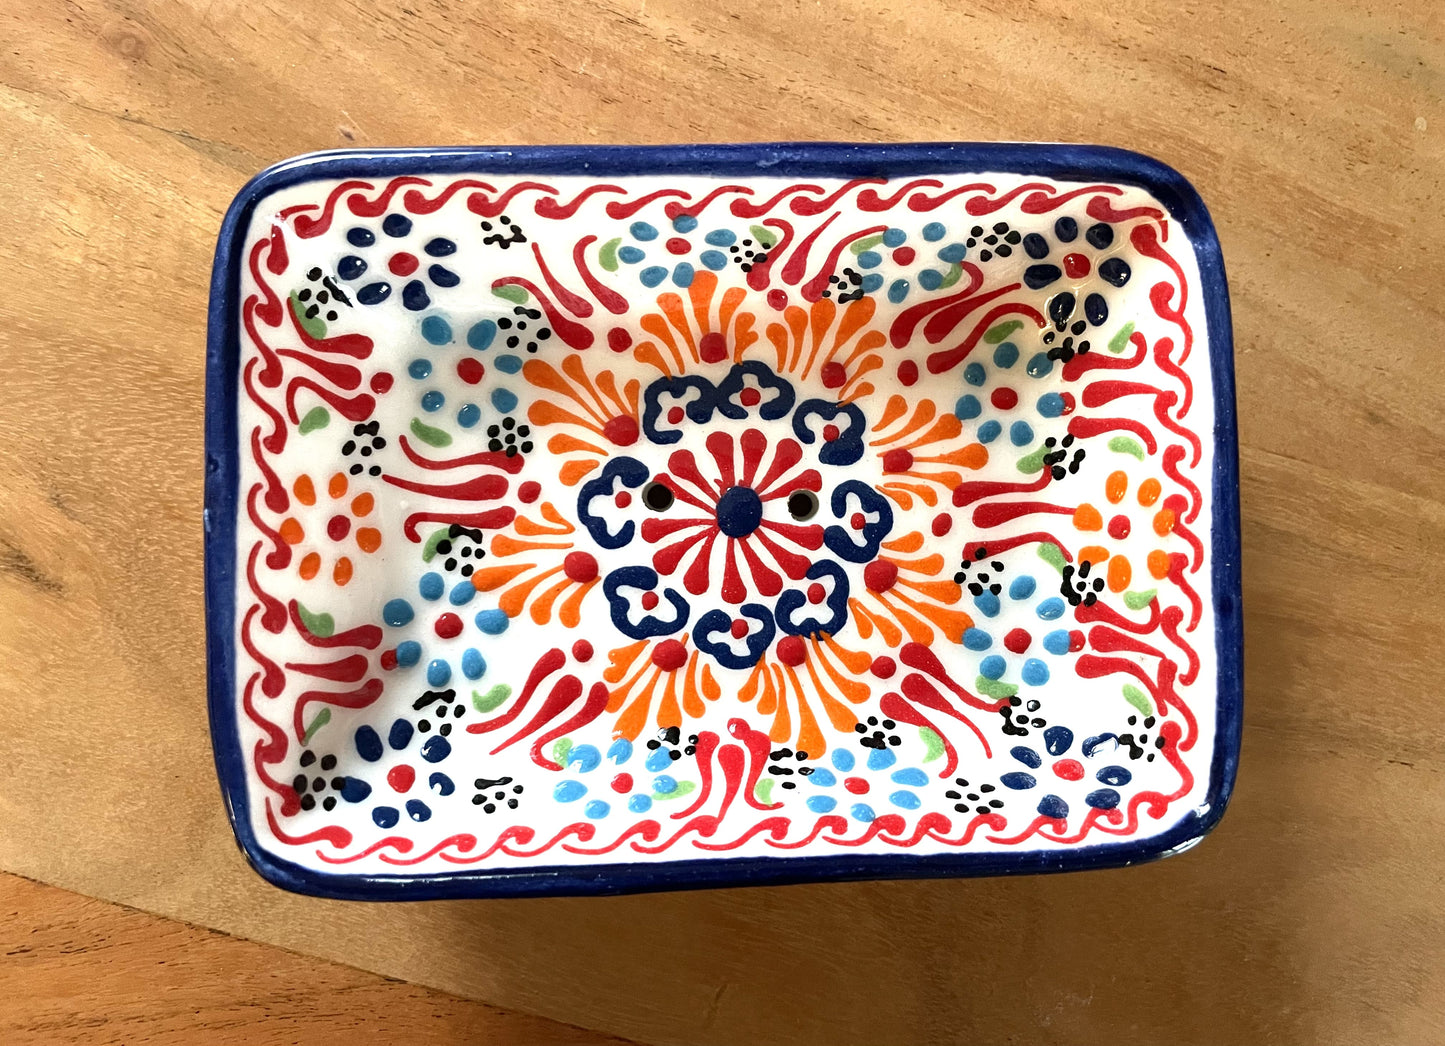 Keramik Seifenschale rot weiß blau - türkische Iznik Keramik